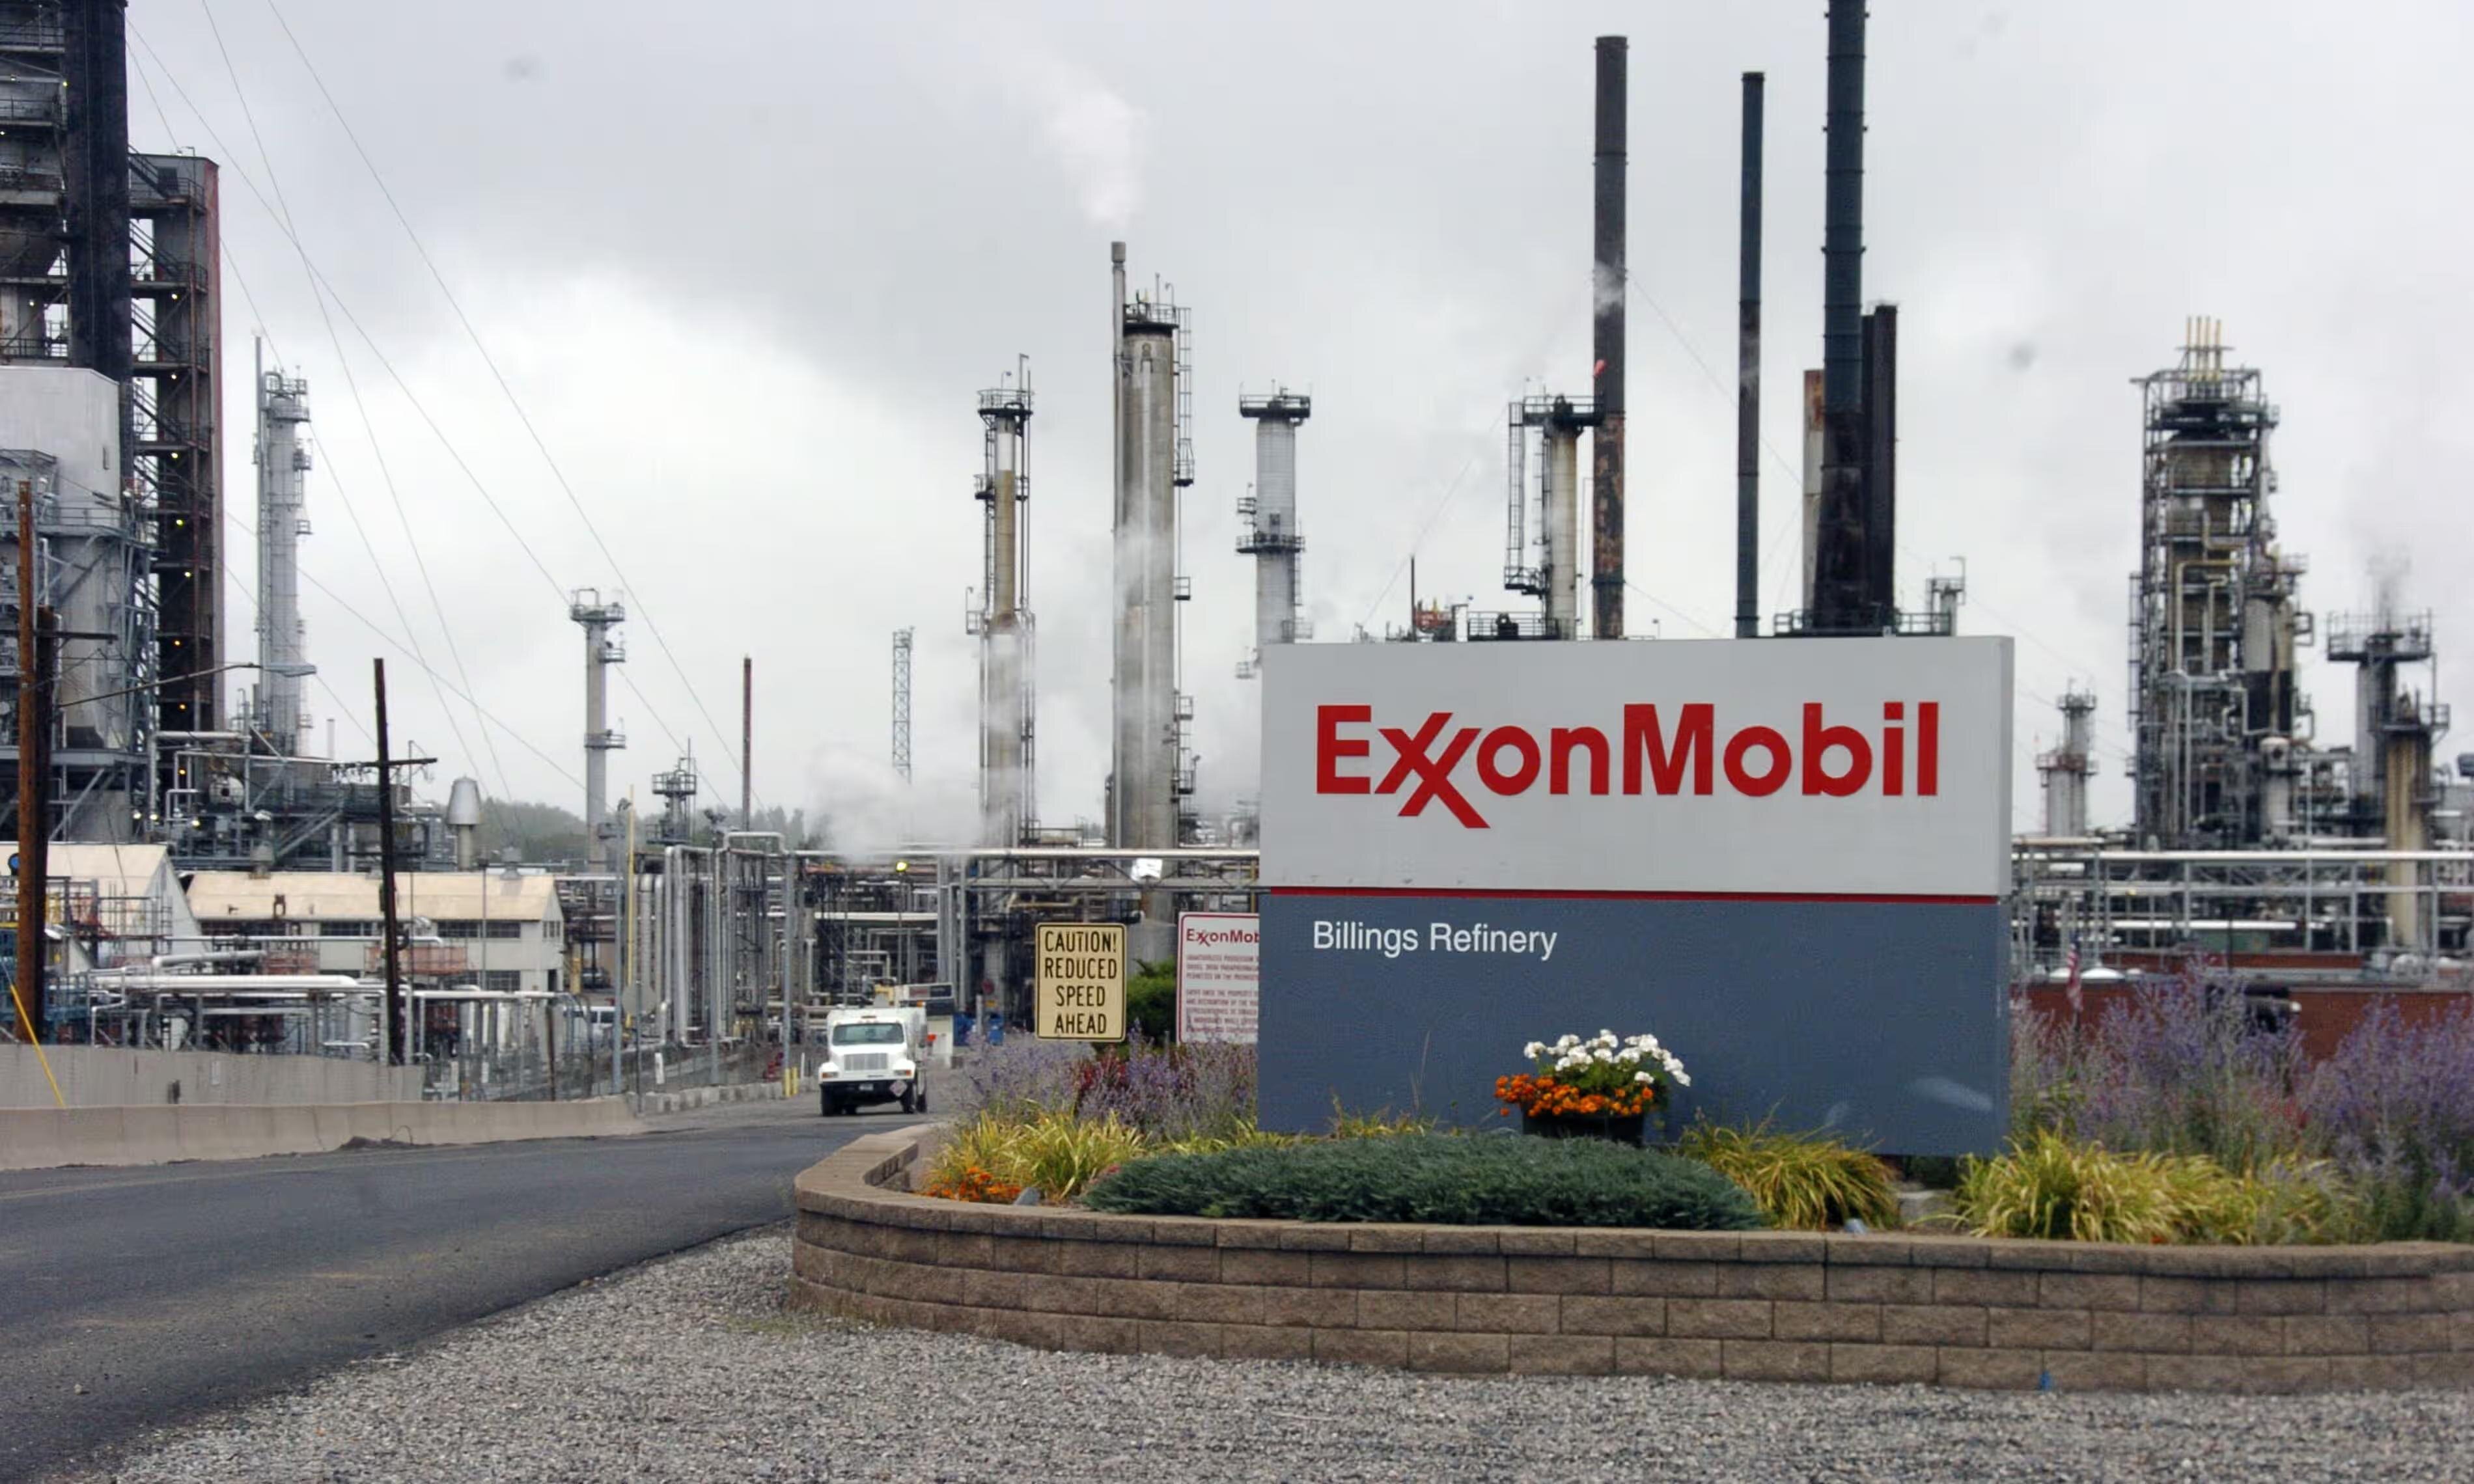 More information about "ExxonMobil Liberian oil deal went ahead despite anti-corruption concerns"